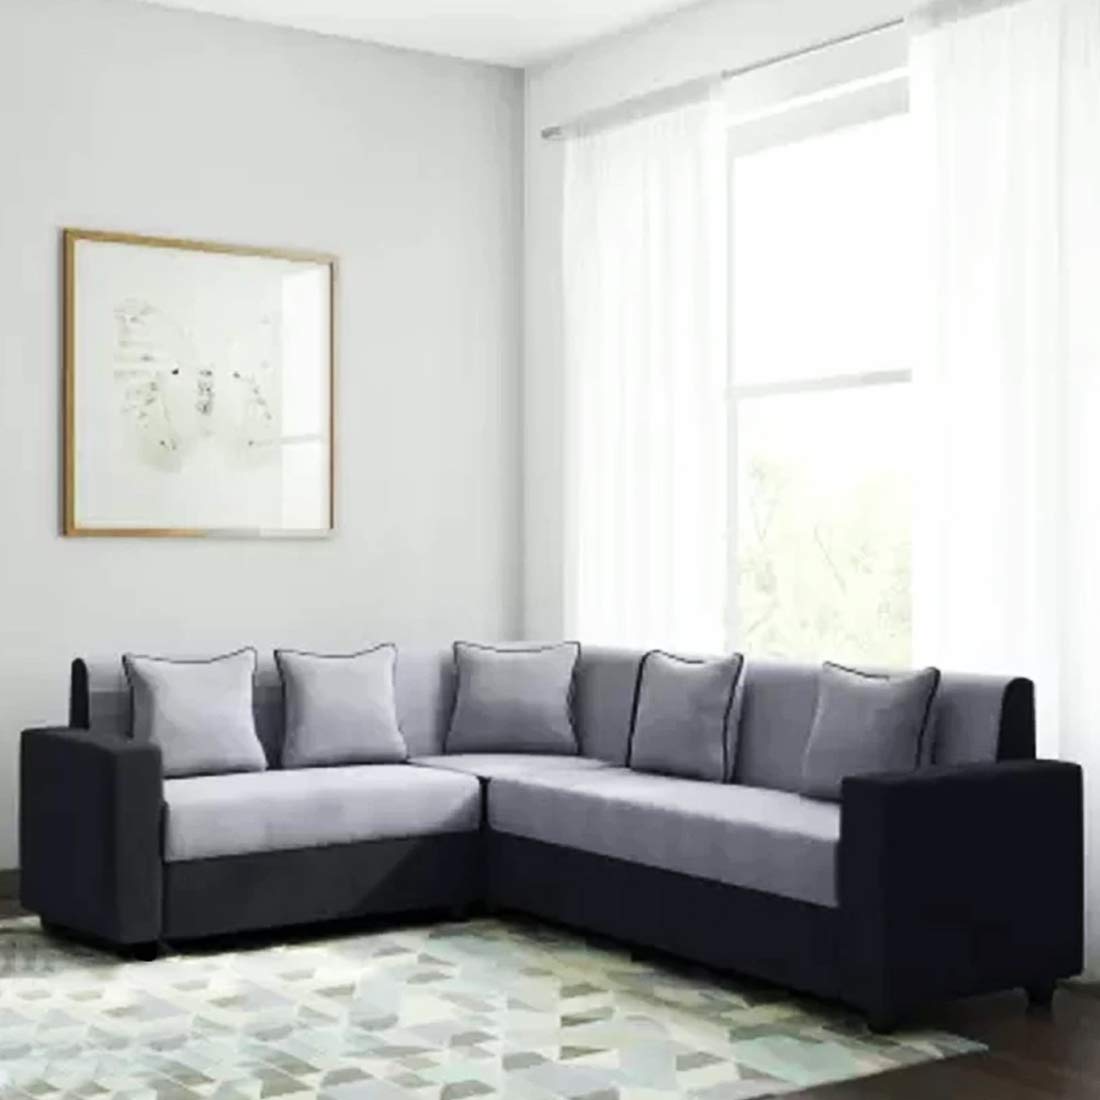 Orbito comfortable sofa from ORBITO INTERNATIONAL